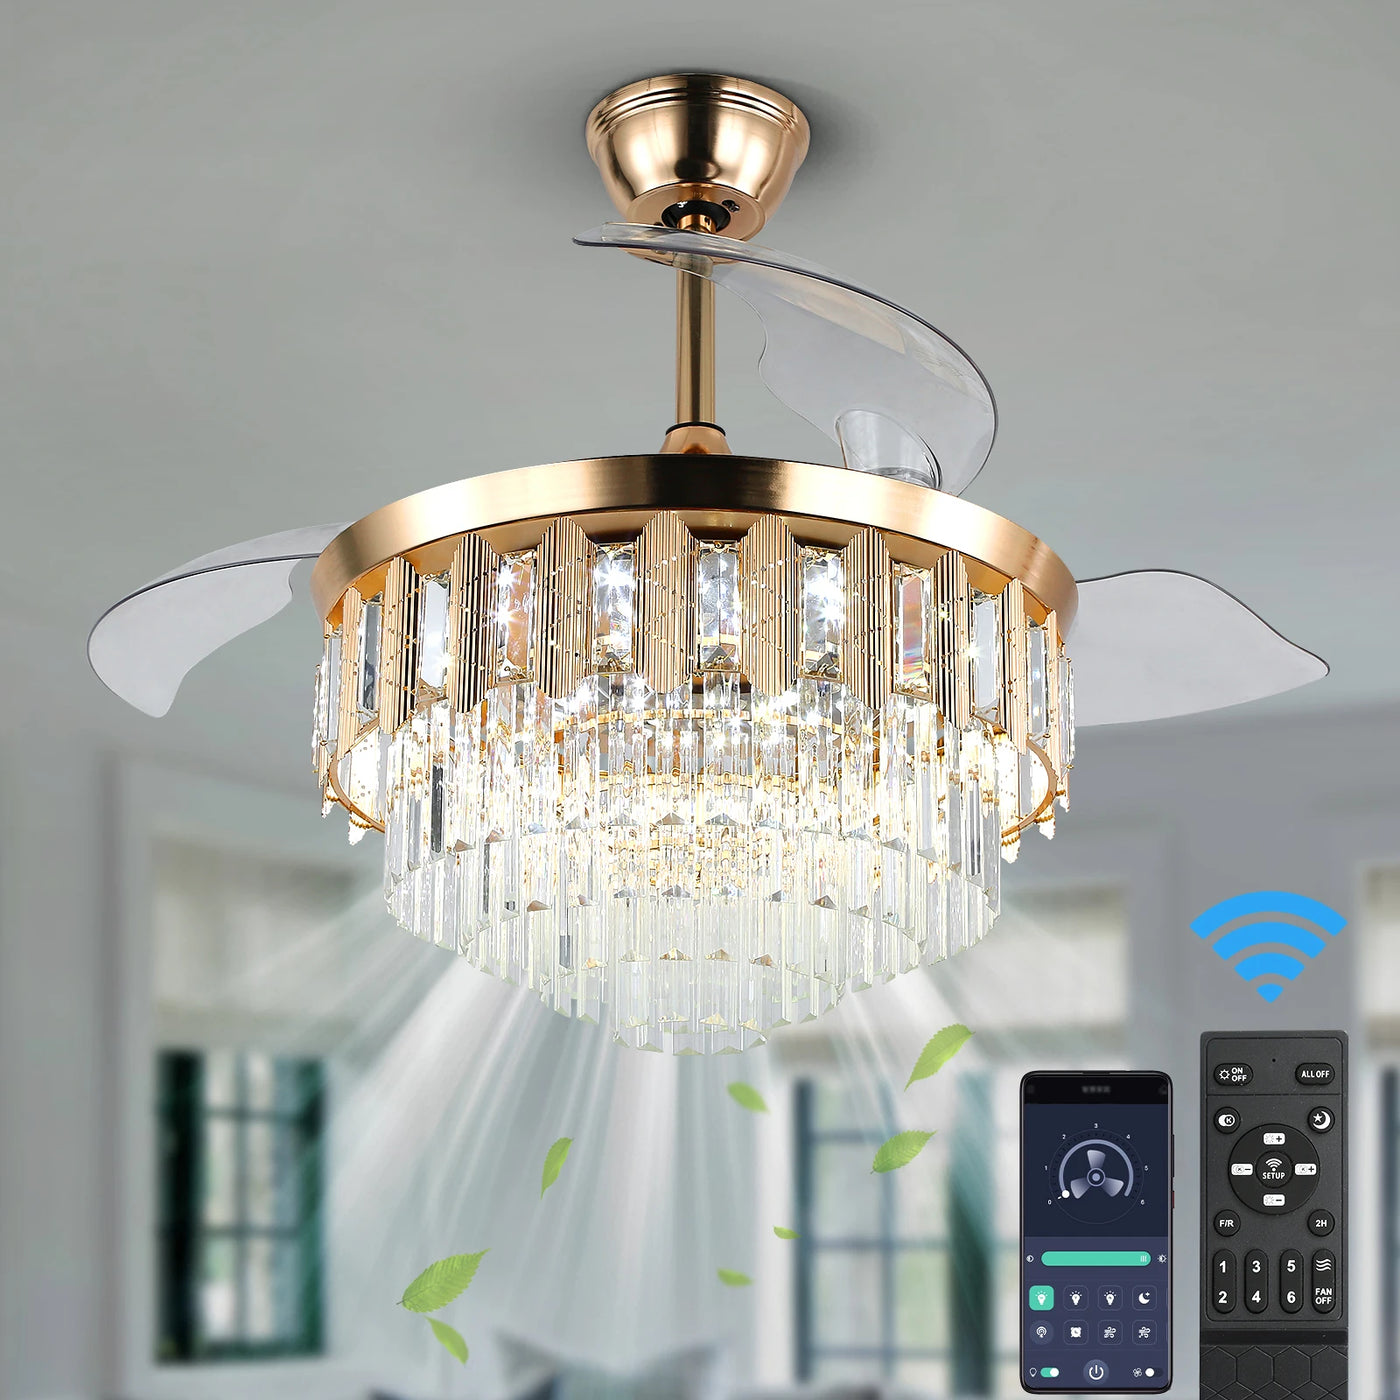 Smart Ceiling Fan with LED Light, Remote Control, Reversible BLDC Motor, Adjustable Indoor Fixture